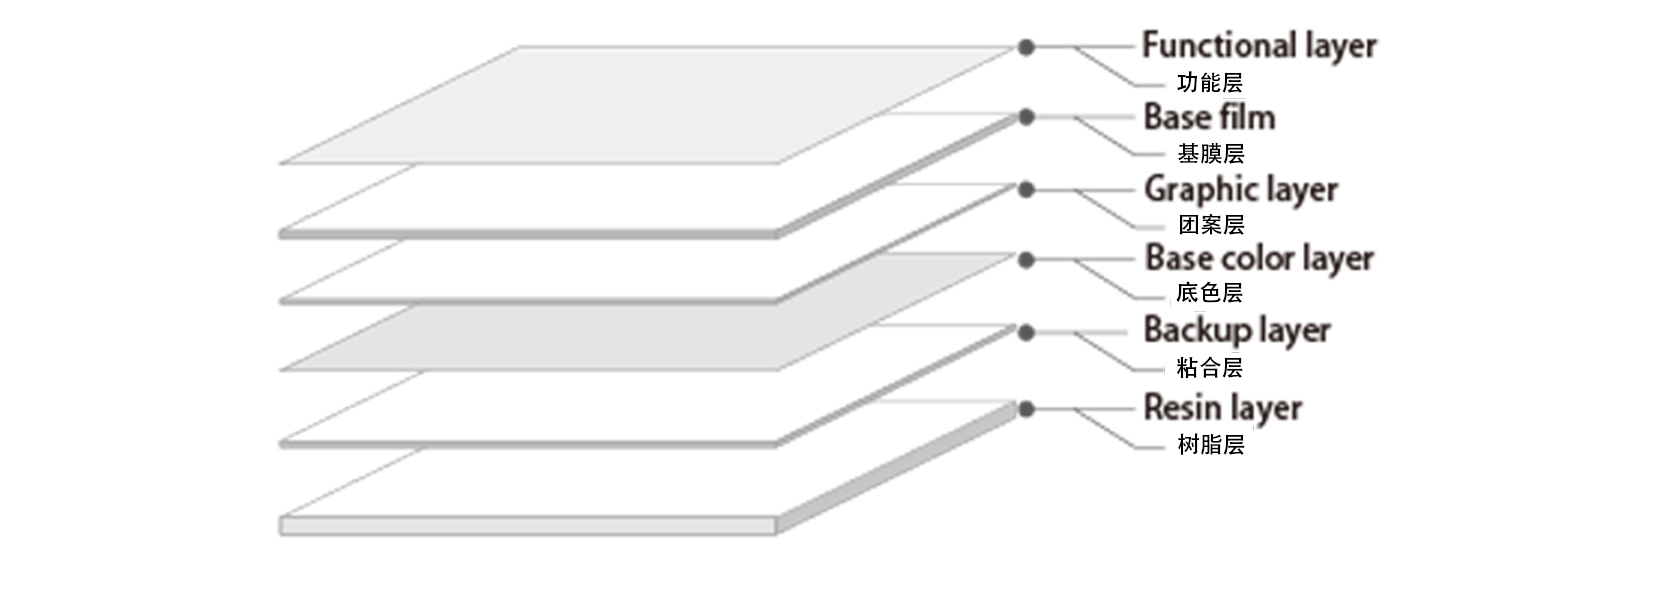 IMR-TJプロセスの階層構造図